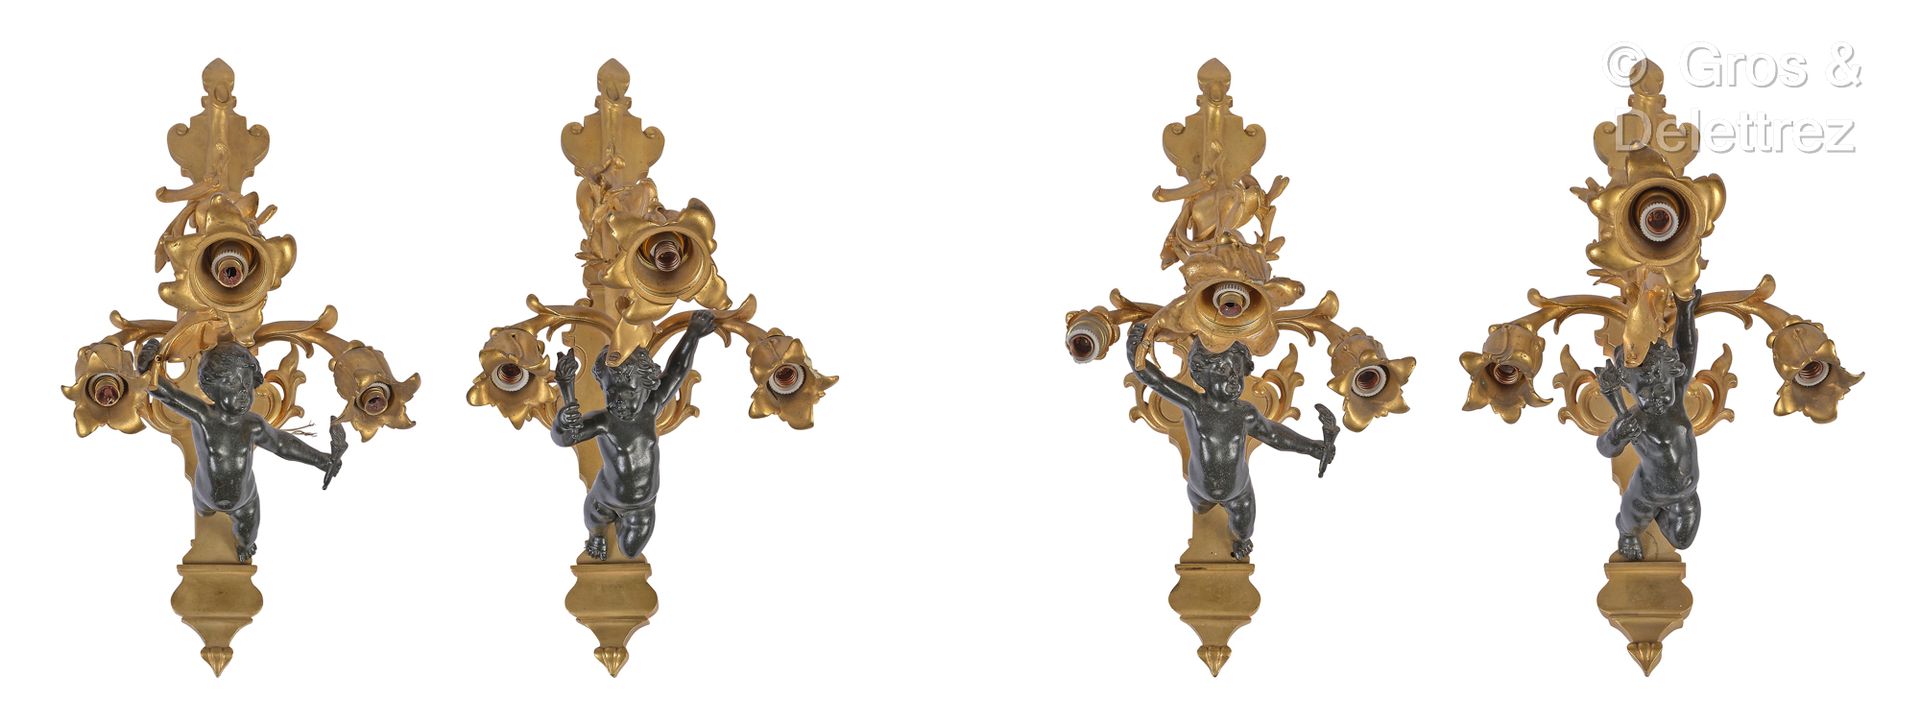 Null 一套四件镀铜和镀金的青铜三灯壁灯，描绘了飞行中的爱情，手持火把。

洛可可风格

50 x 24 厘米